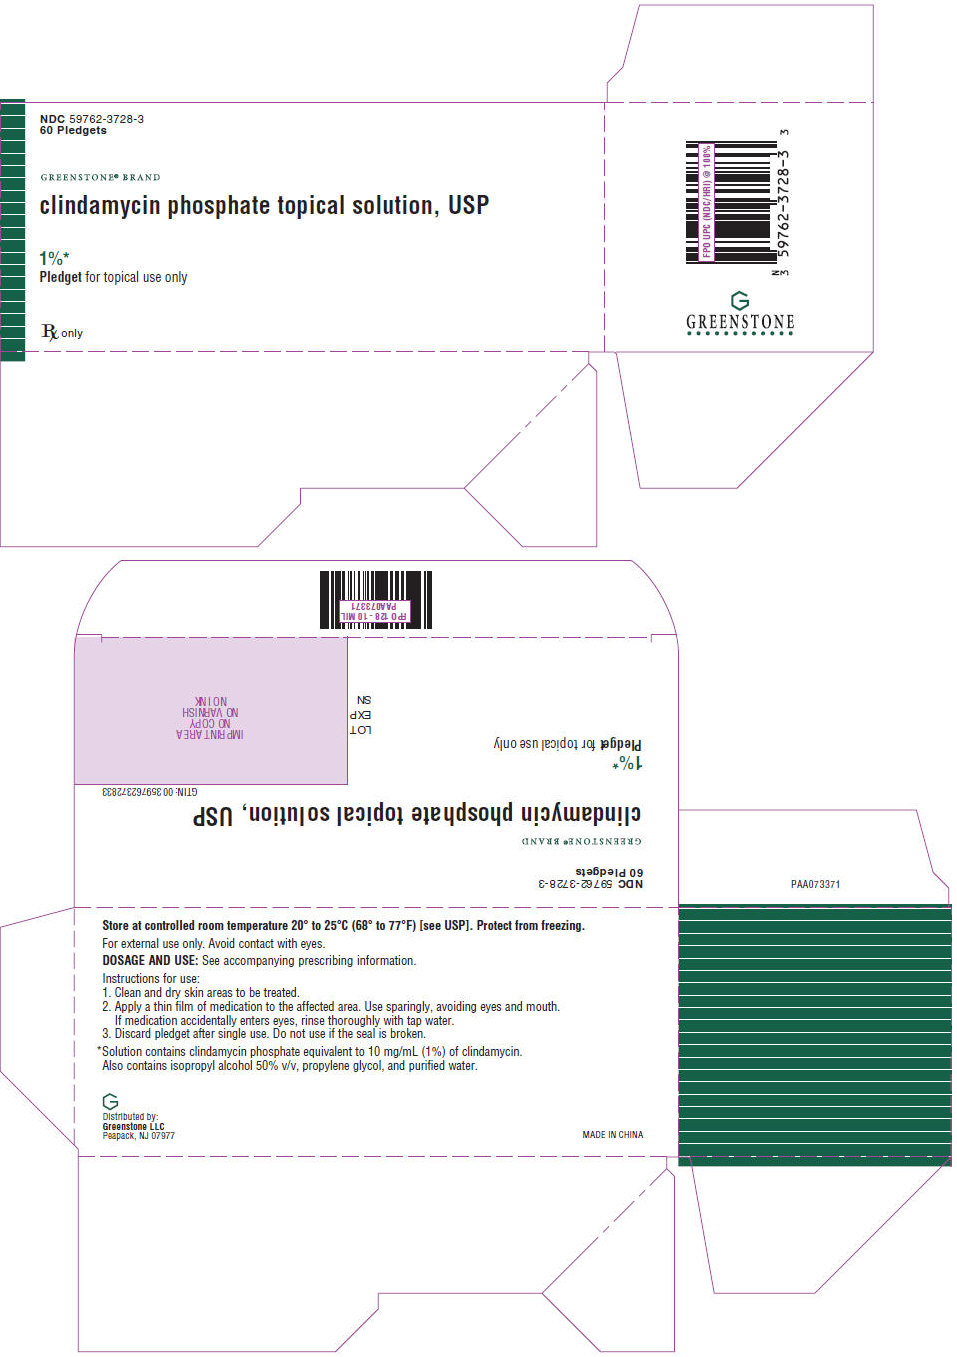 PRINCIPAL DISPLAY PANEL - 60 Pledget Packet Carton